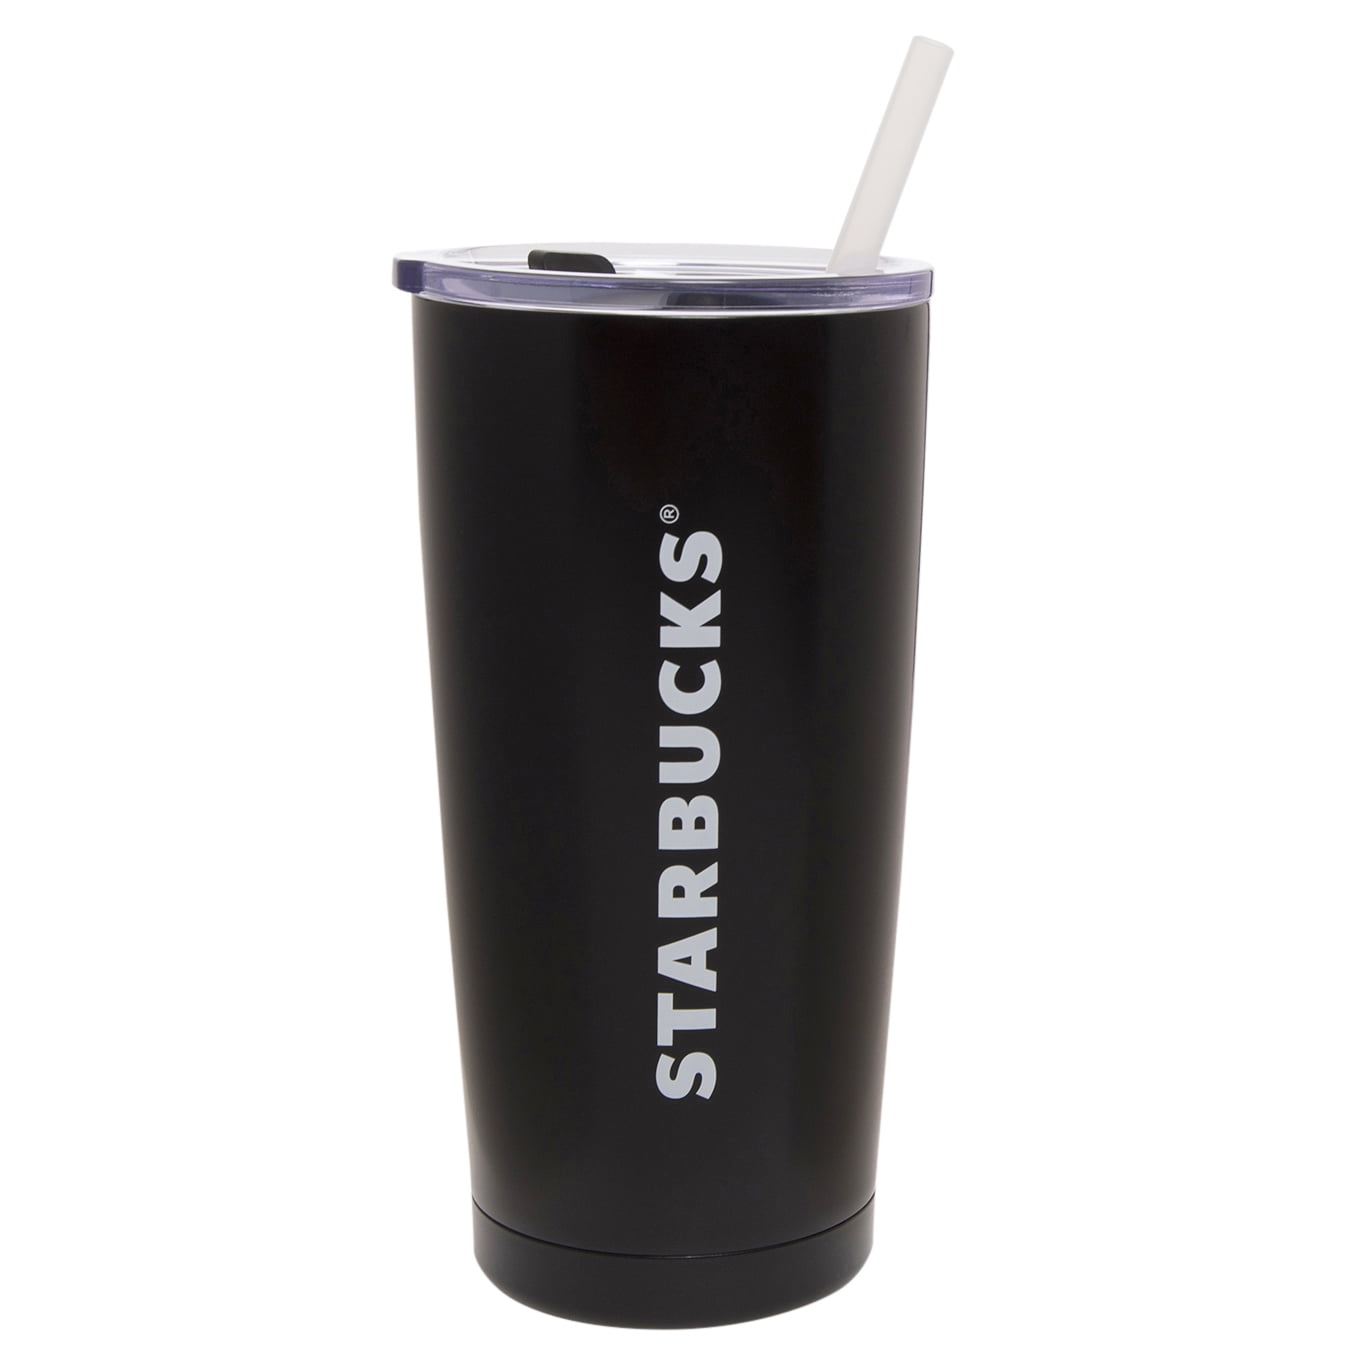 Starbucks Korea Matt Black Flat Cold Cup Tumbler Coffee Collectible 473ml NEW